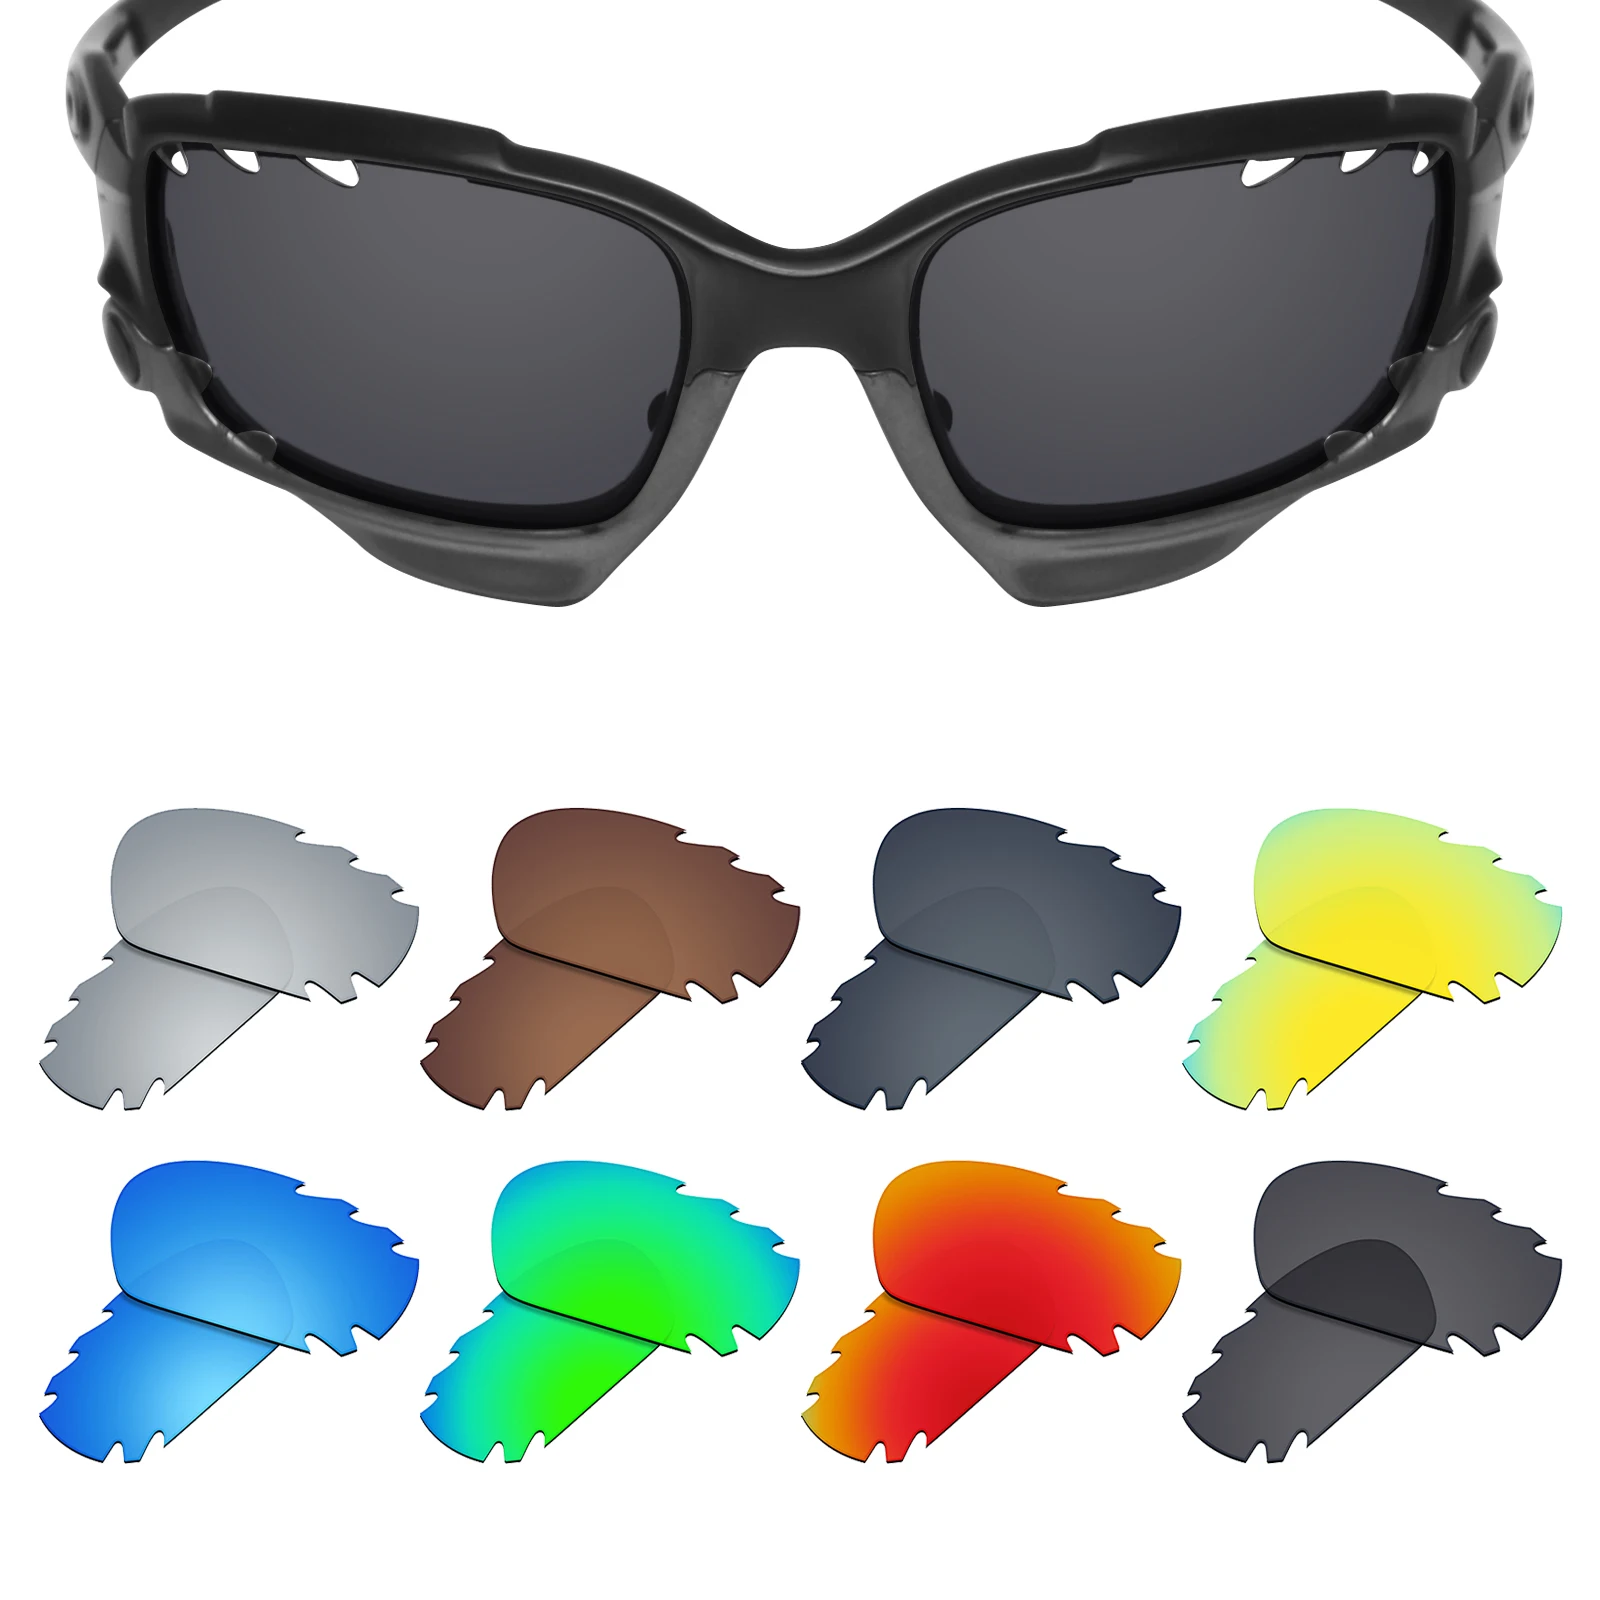 SmartVLT Performance-lentes polarizadas de repuesto para gafas de sol, lentes de sol transpirables, con múltiples opciones